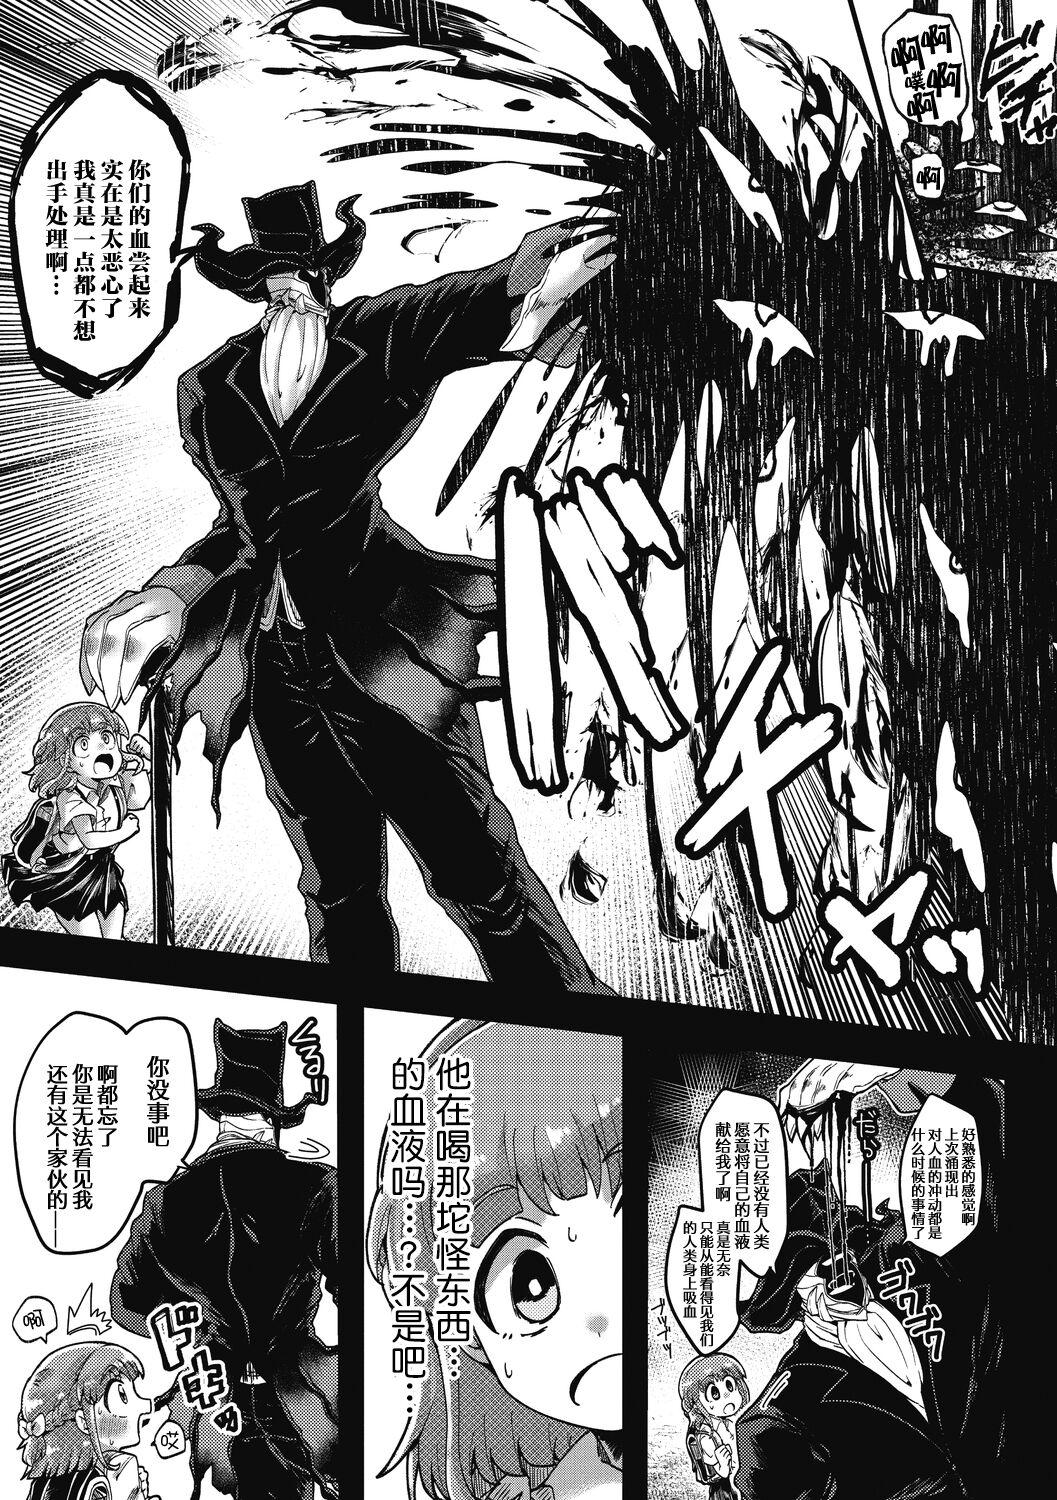 Novinho Watashi no Homme Fatale Bang Bros - Page 3